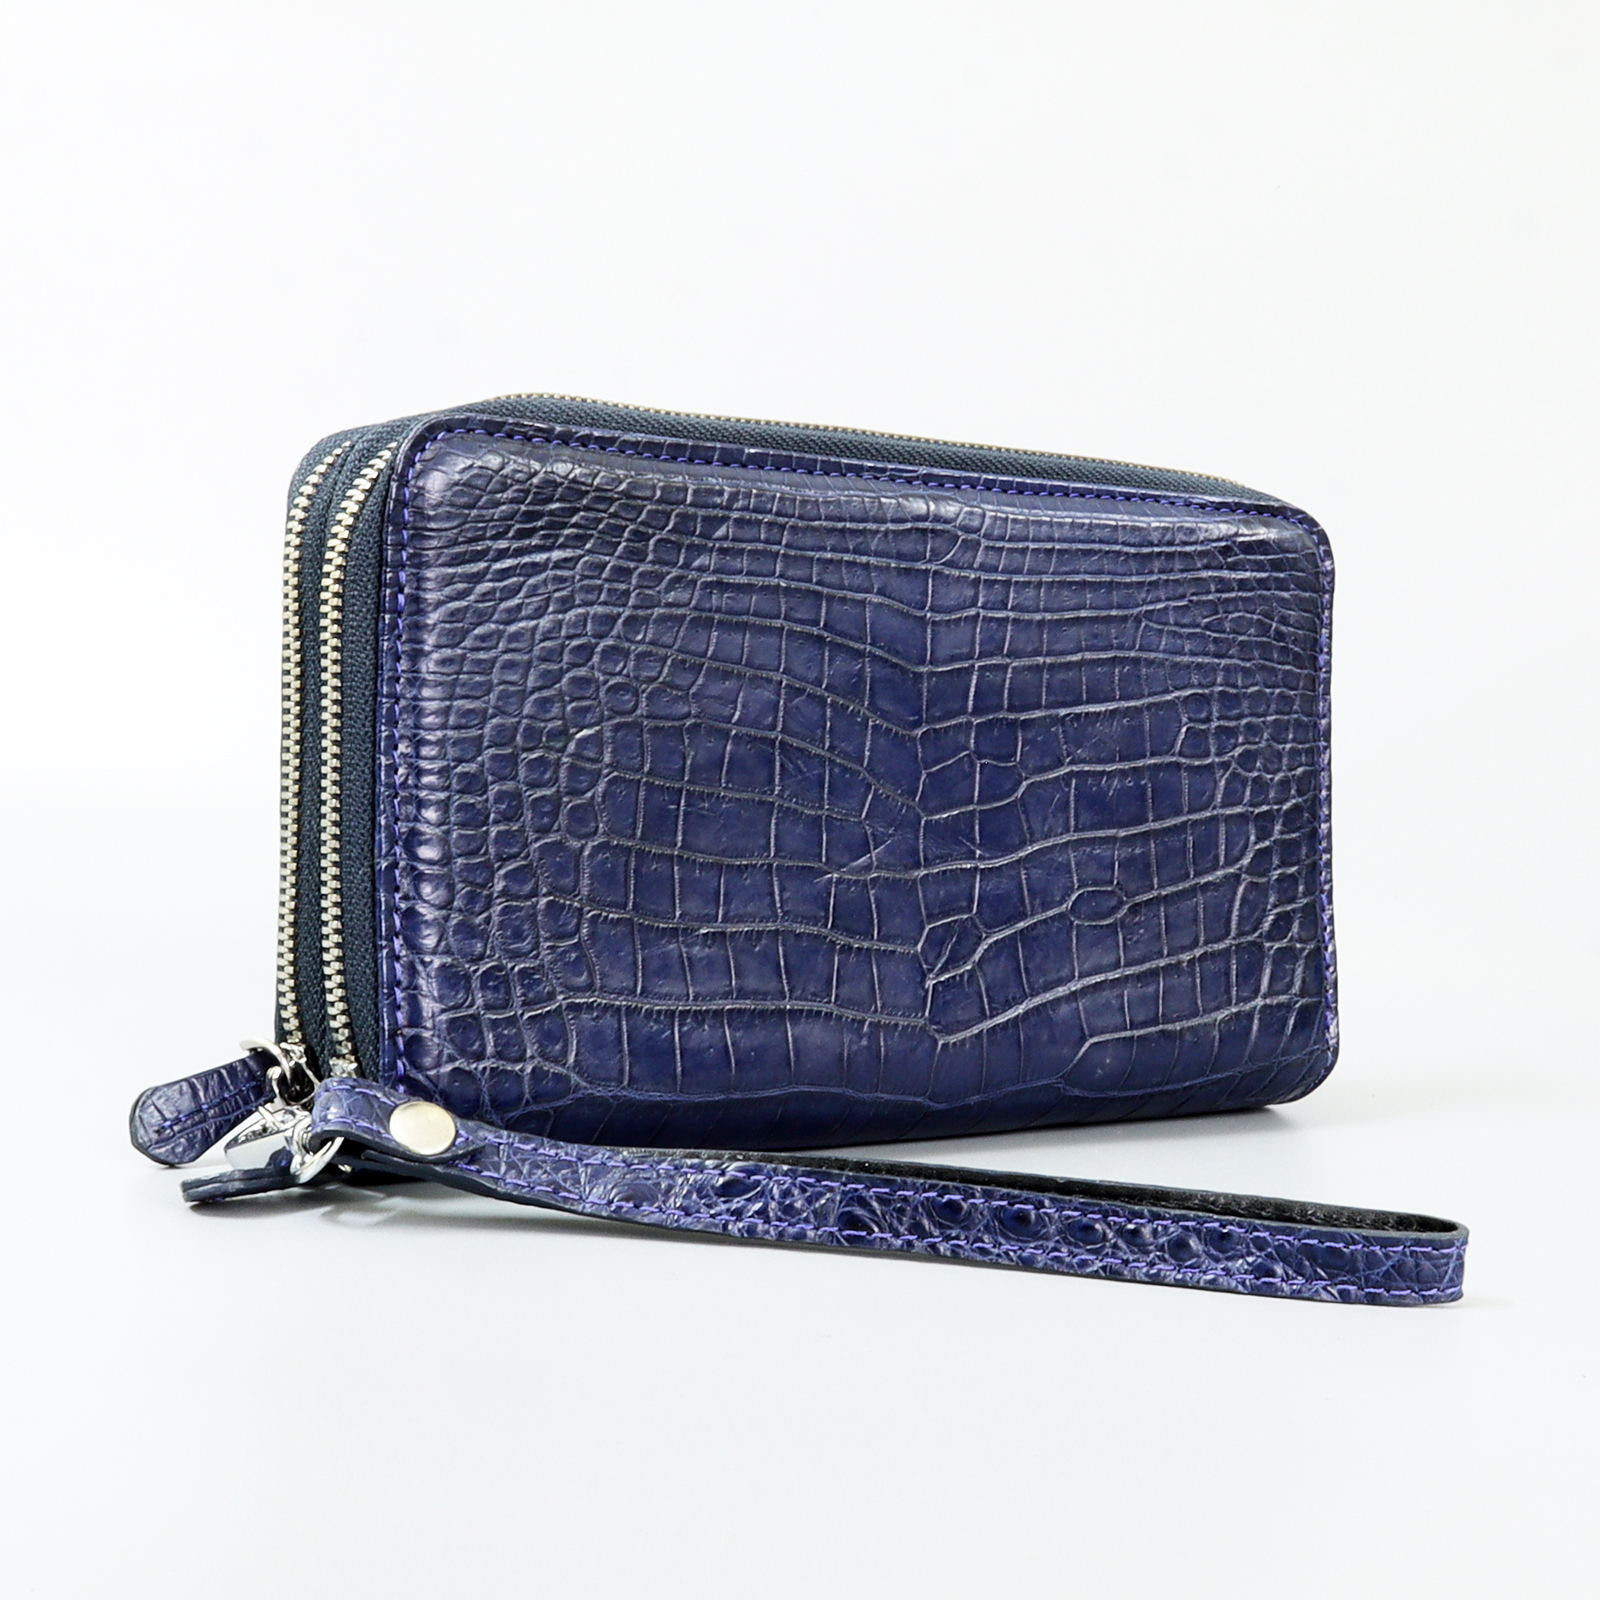 Genuine Leather Crocodile Skin Long Wallet 2 Zip-Around Clutch Handbag, Navy Blue